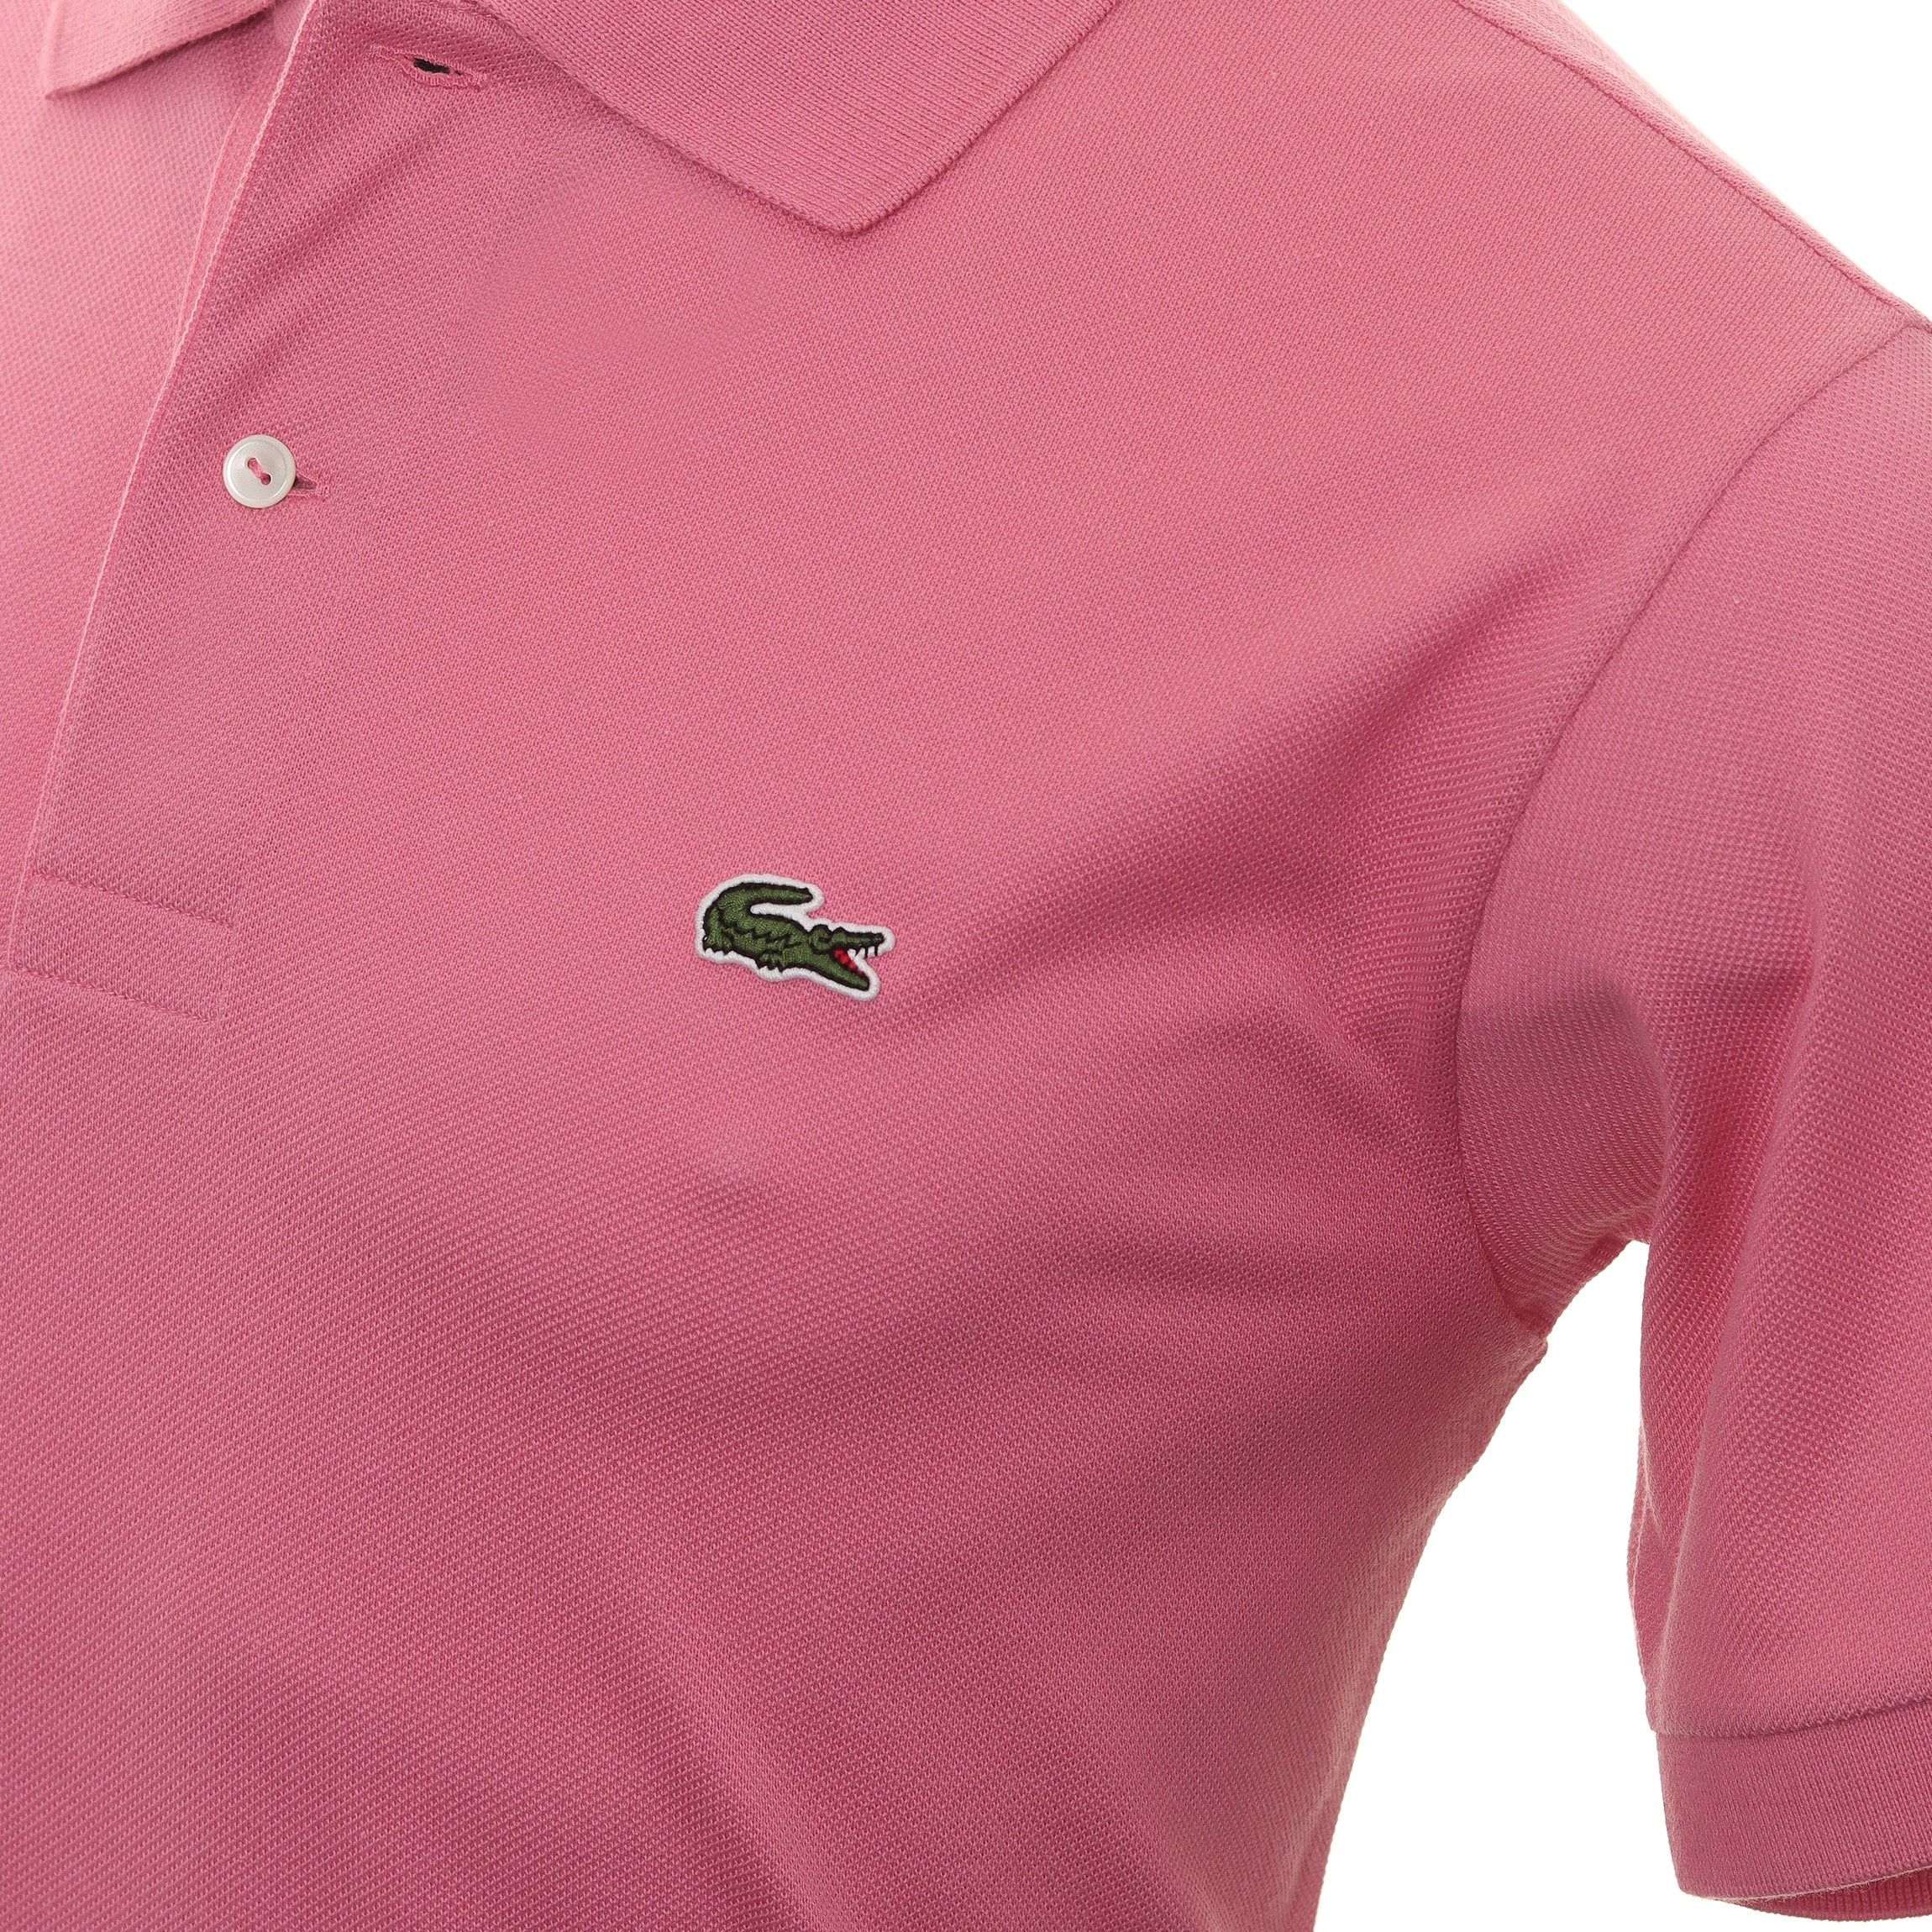 Schmuckgeschäft Lacoste Classic Pique Polo | Function18 Pink 2R3 Reseda L1212 Restrictedgs | Shirt